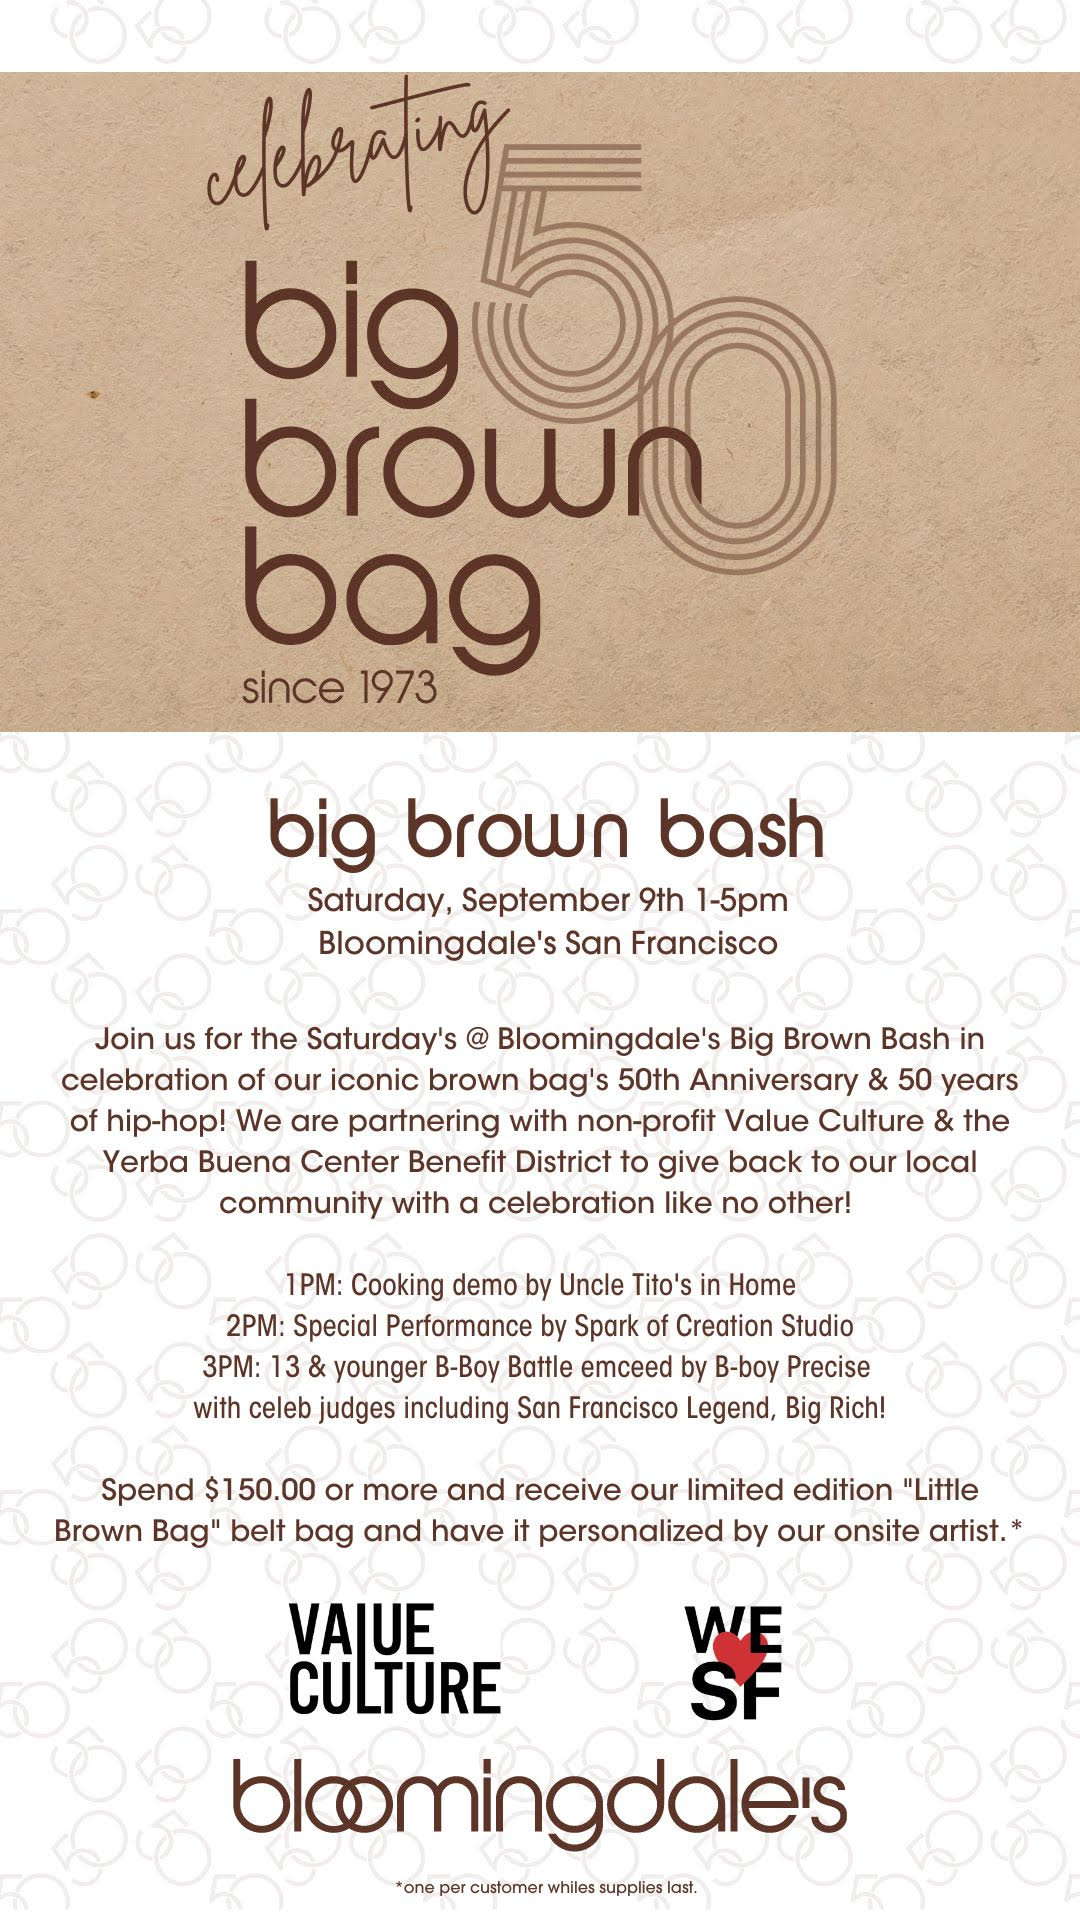 BLOOMINGDALE'S CELEBRATES 50 YEARS OF ITS ICONIC BIG BROWN BAG